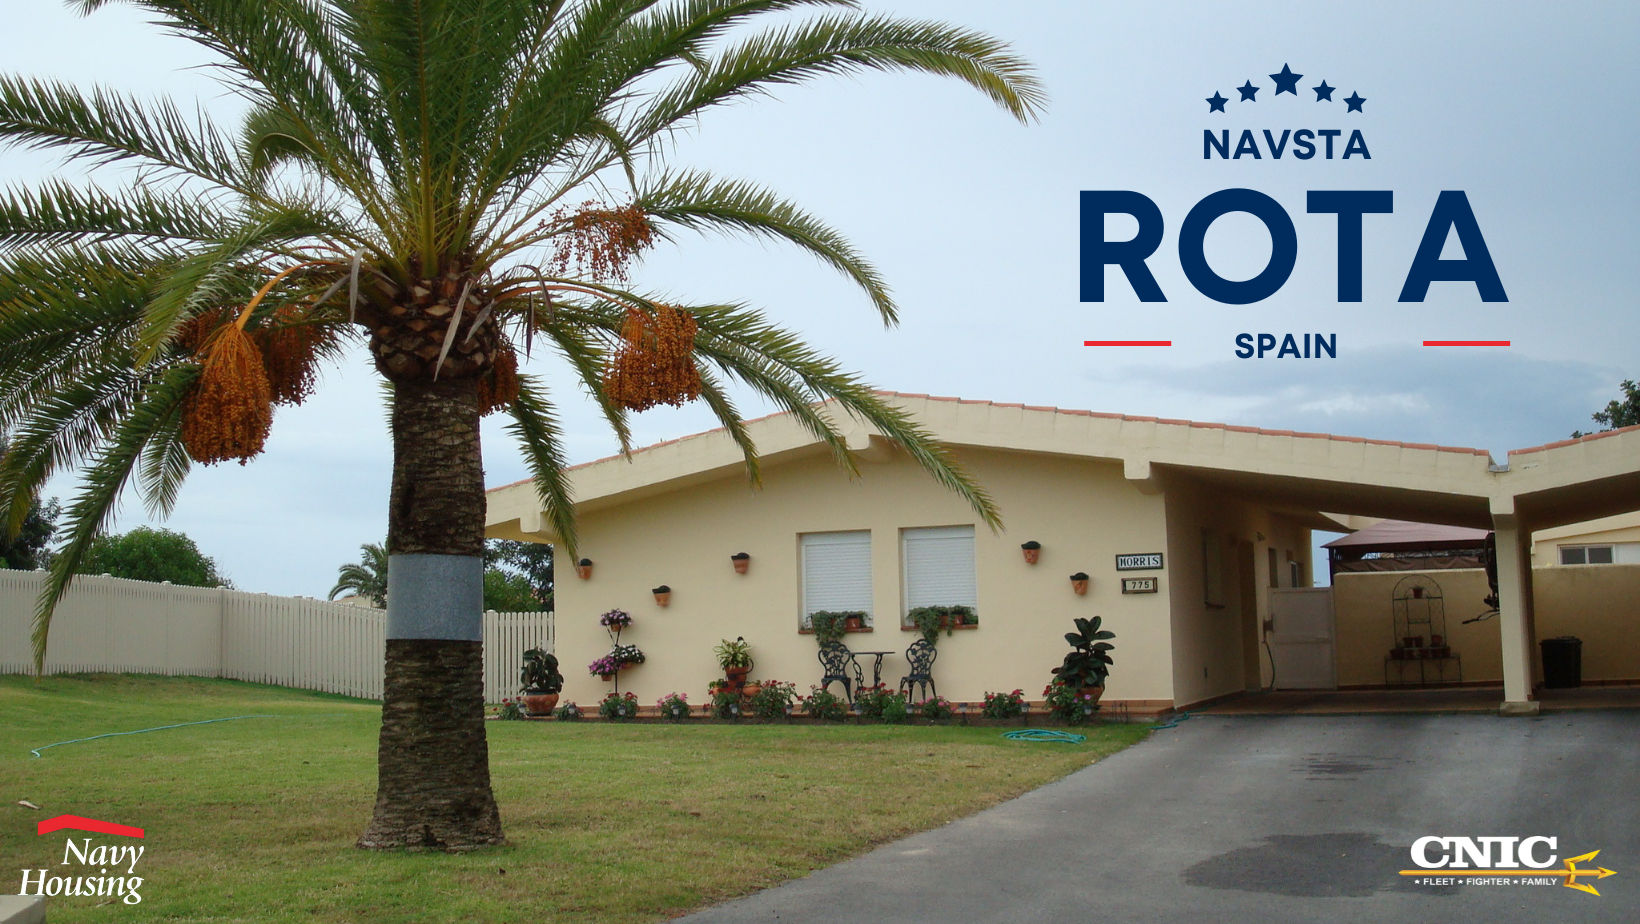 Navy Housing - NAVSTA Rota